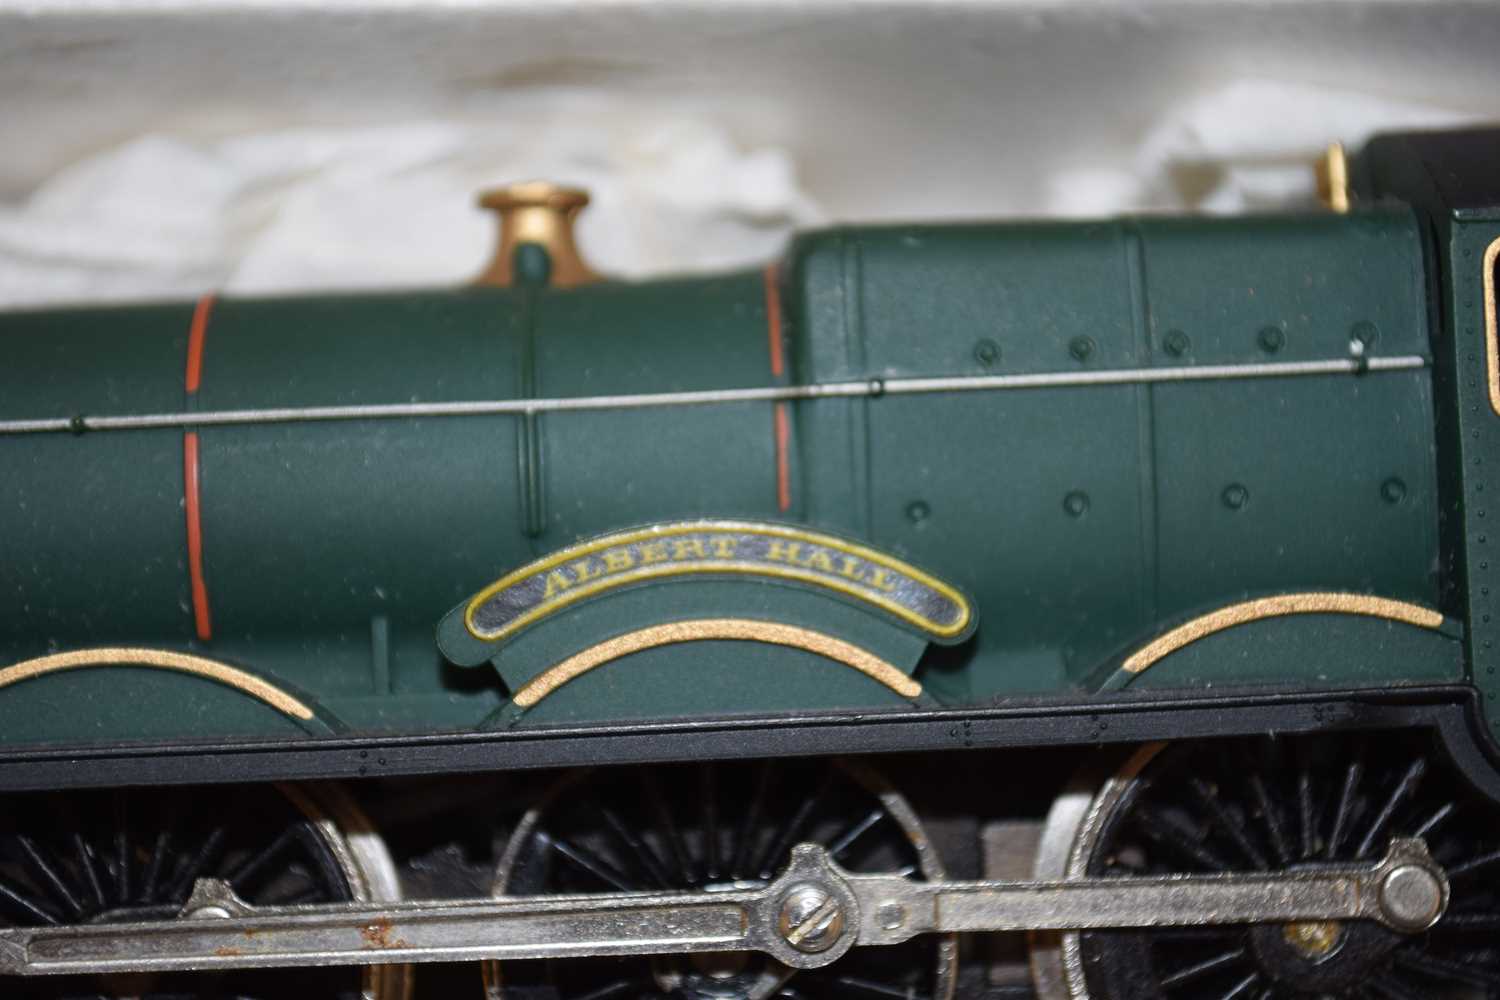 00 gauge locomotive 'Albert Hall' with GW tender (missing outer case, unbranded) - Image 2 of 2